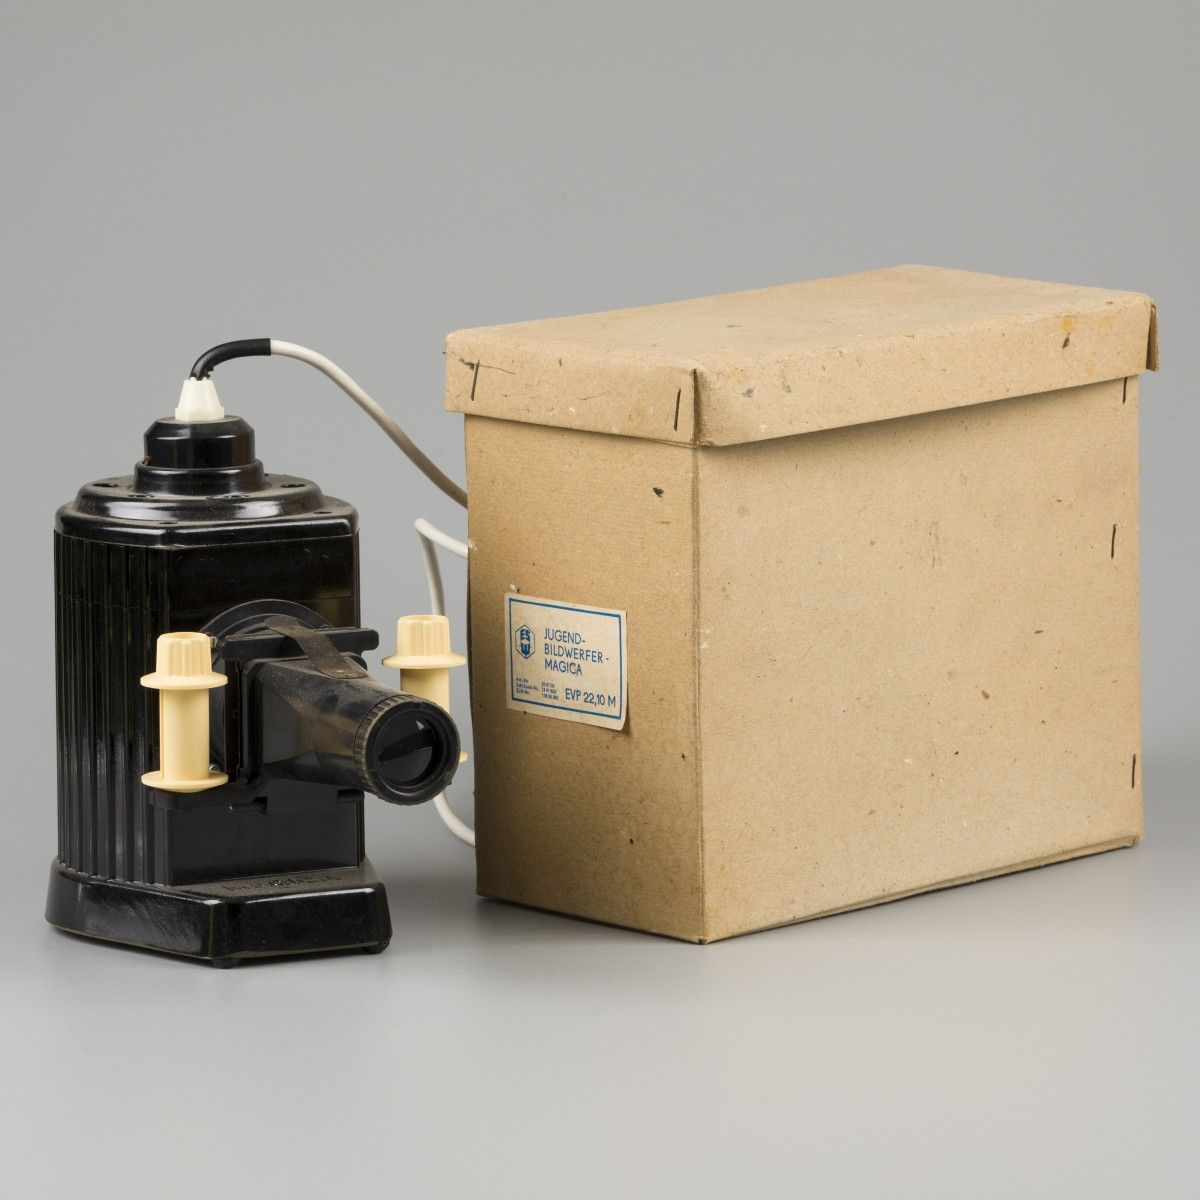 A bakelite magic lantern "Jugend Bildwerfer-Magica" EVP 22,10 mm. Dans la boîte &hellip;